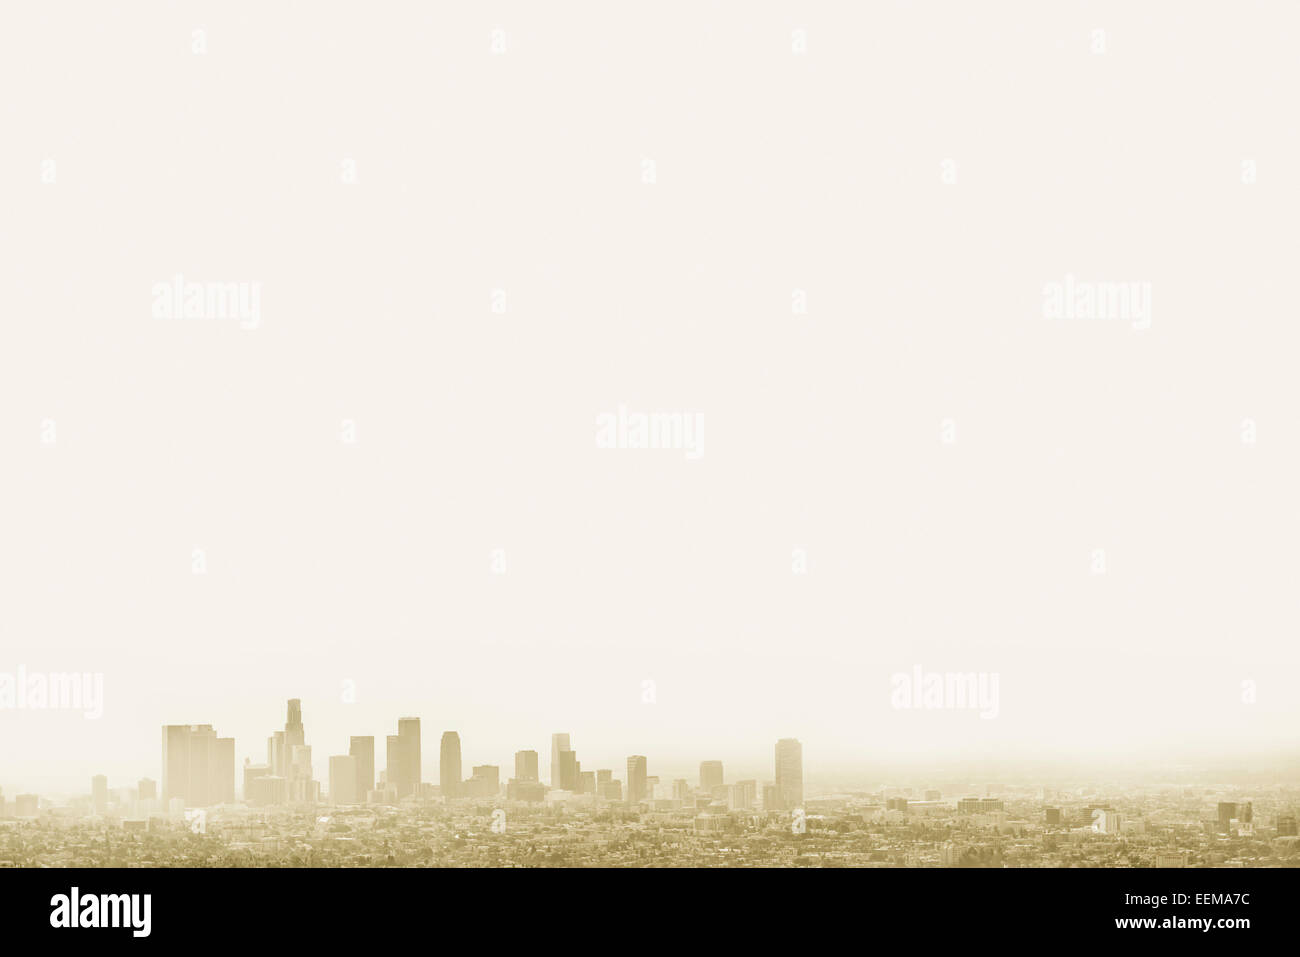 Silhouette of city skyline in hazy sky, Los Angeles, California, United States Stock Photo